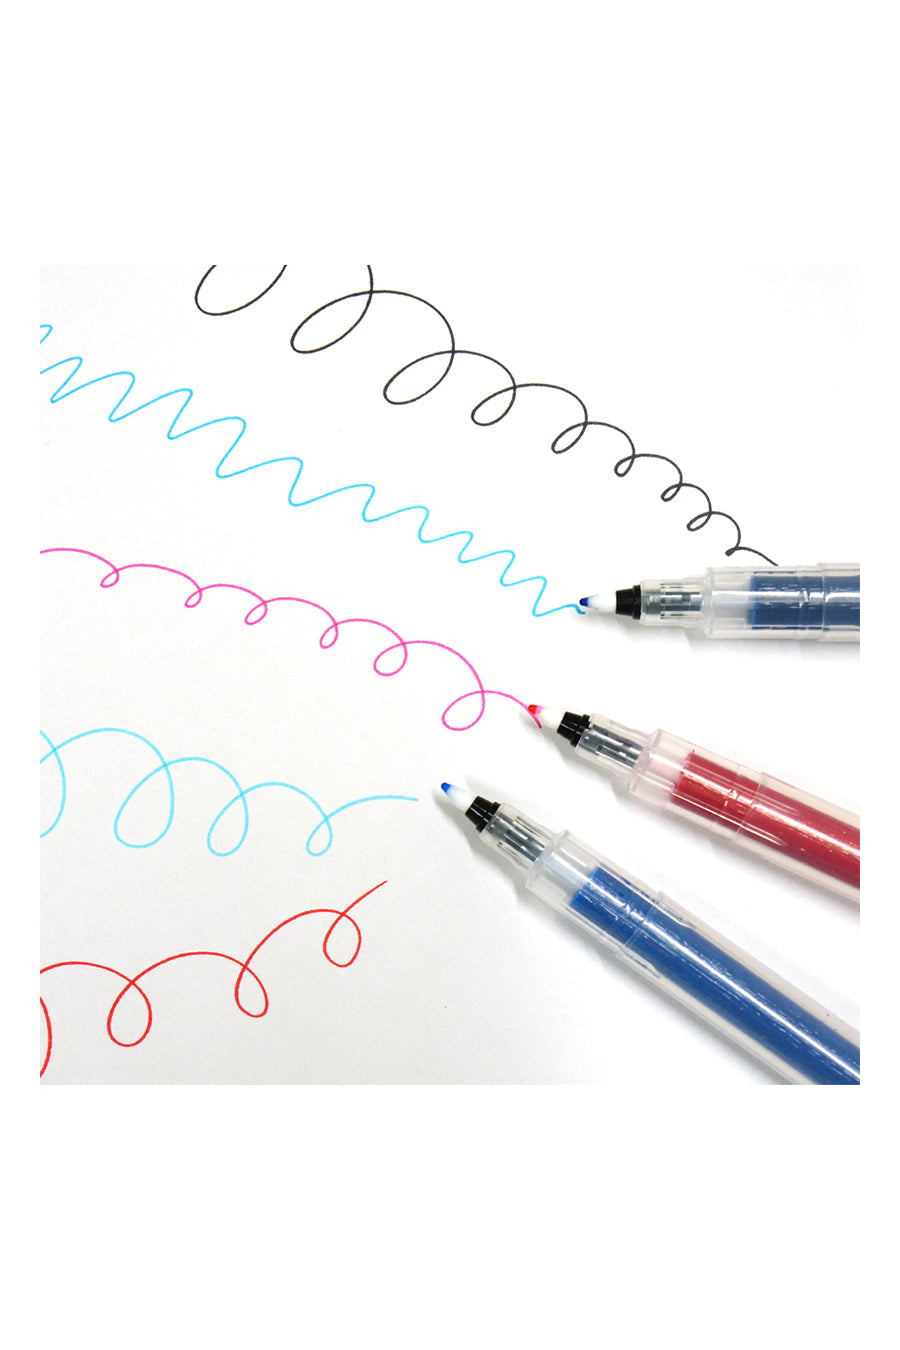 Kuretake® Karappo Pens (Empty Pen) and Cartridges